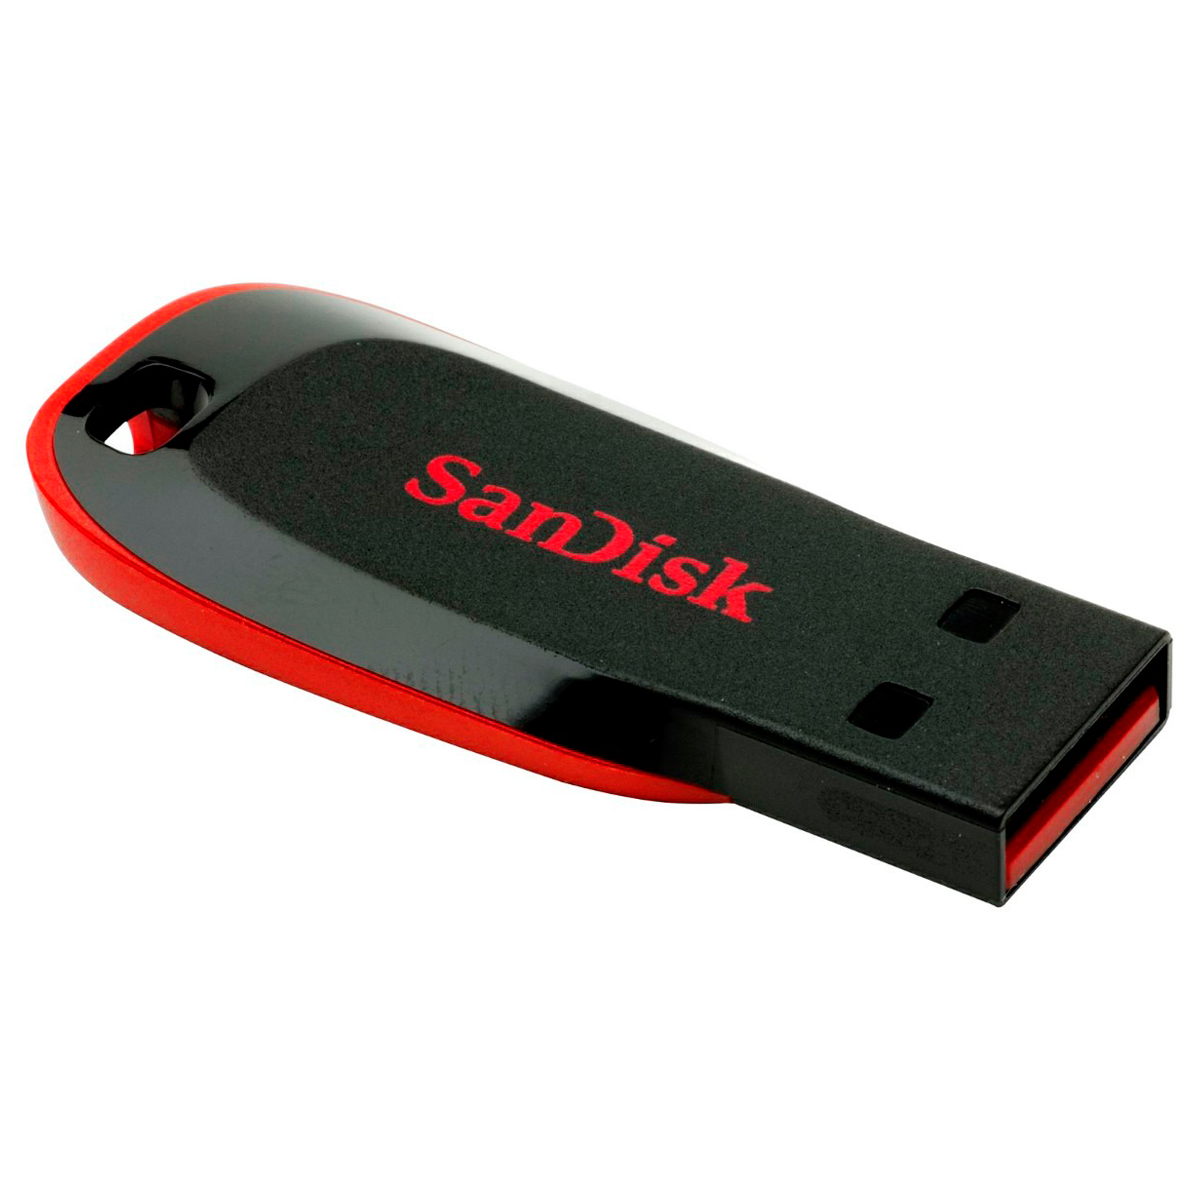 Pendrive Sandisk 32GB